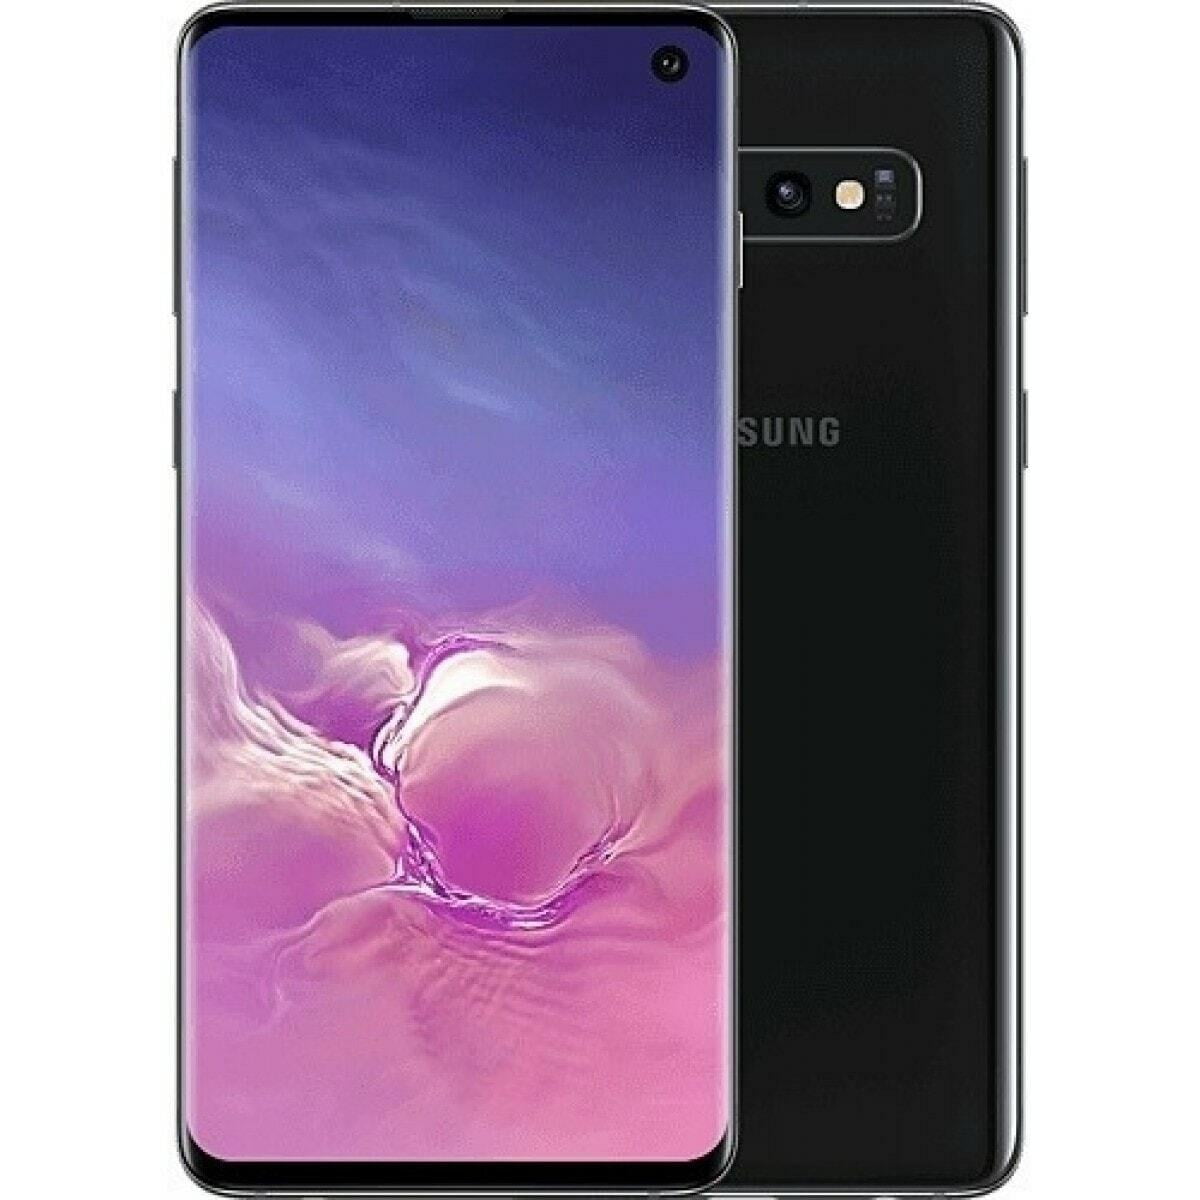 Smartphone Samsung Galaxy S10 - 128 Go - 6,1 - 8 Go RAM - Blanc